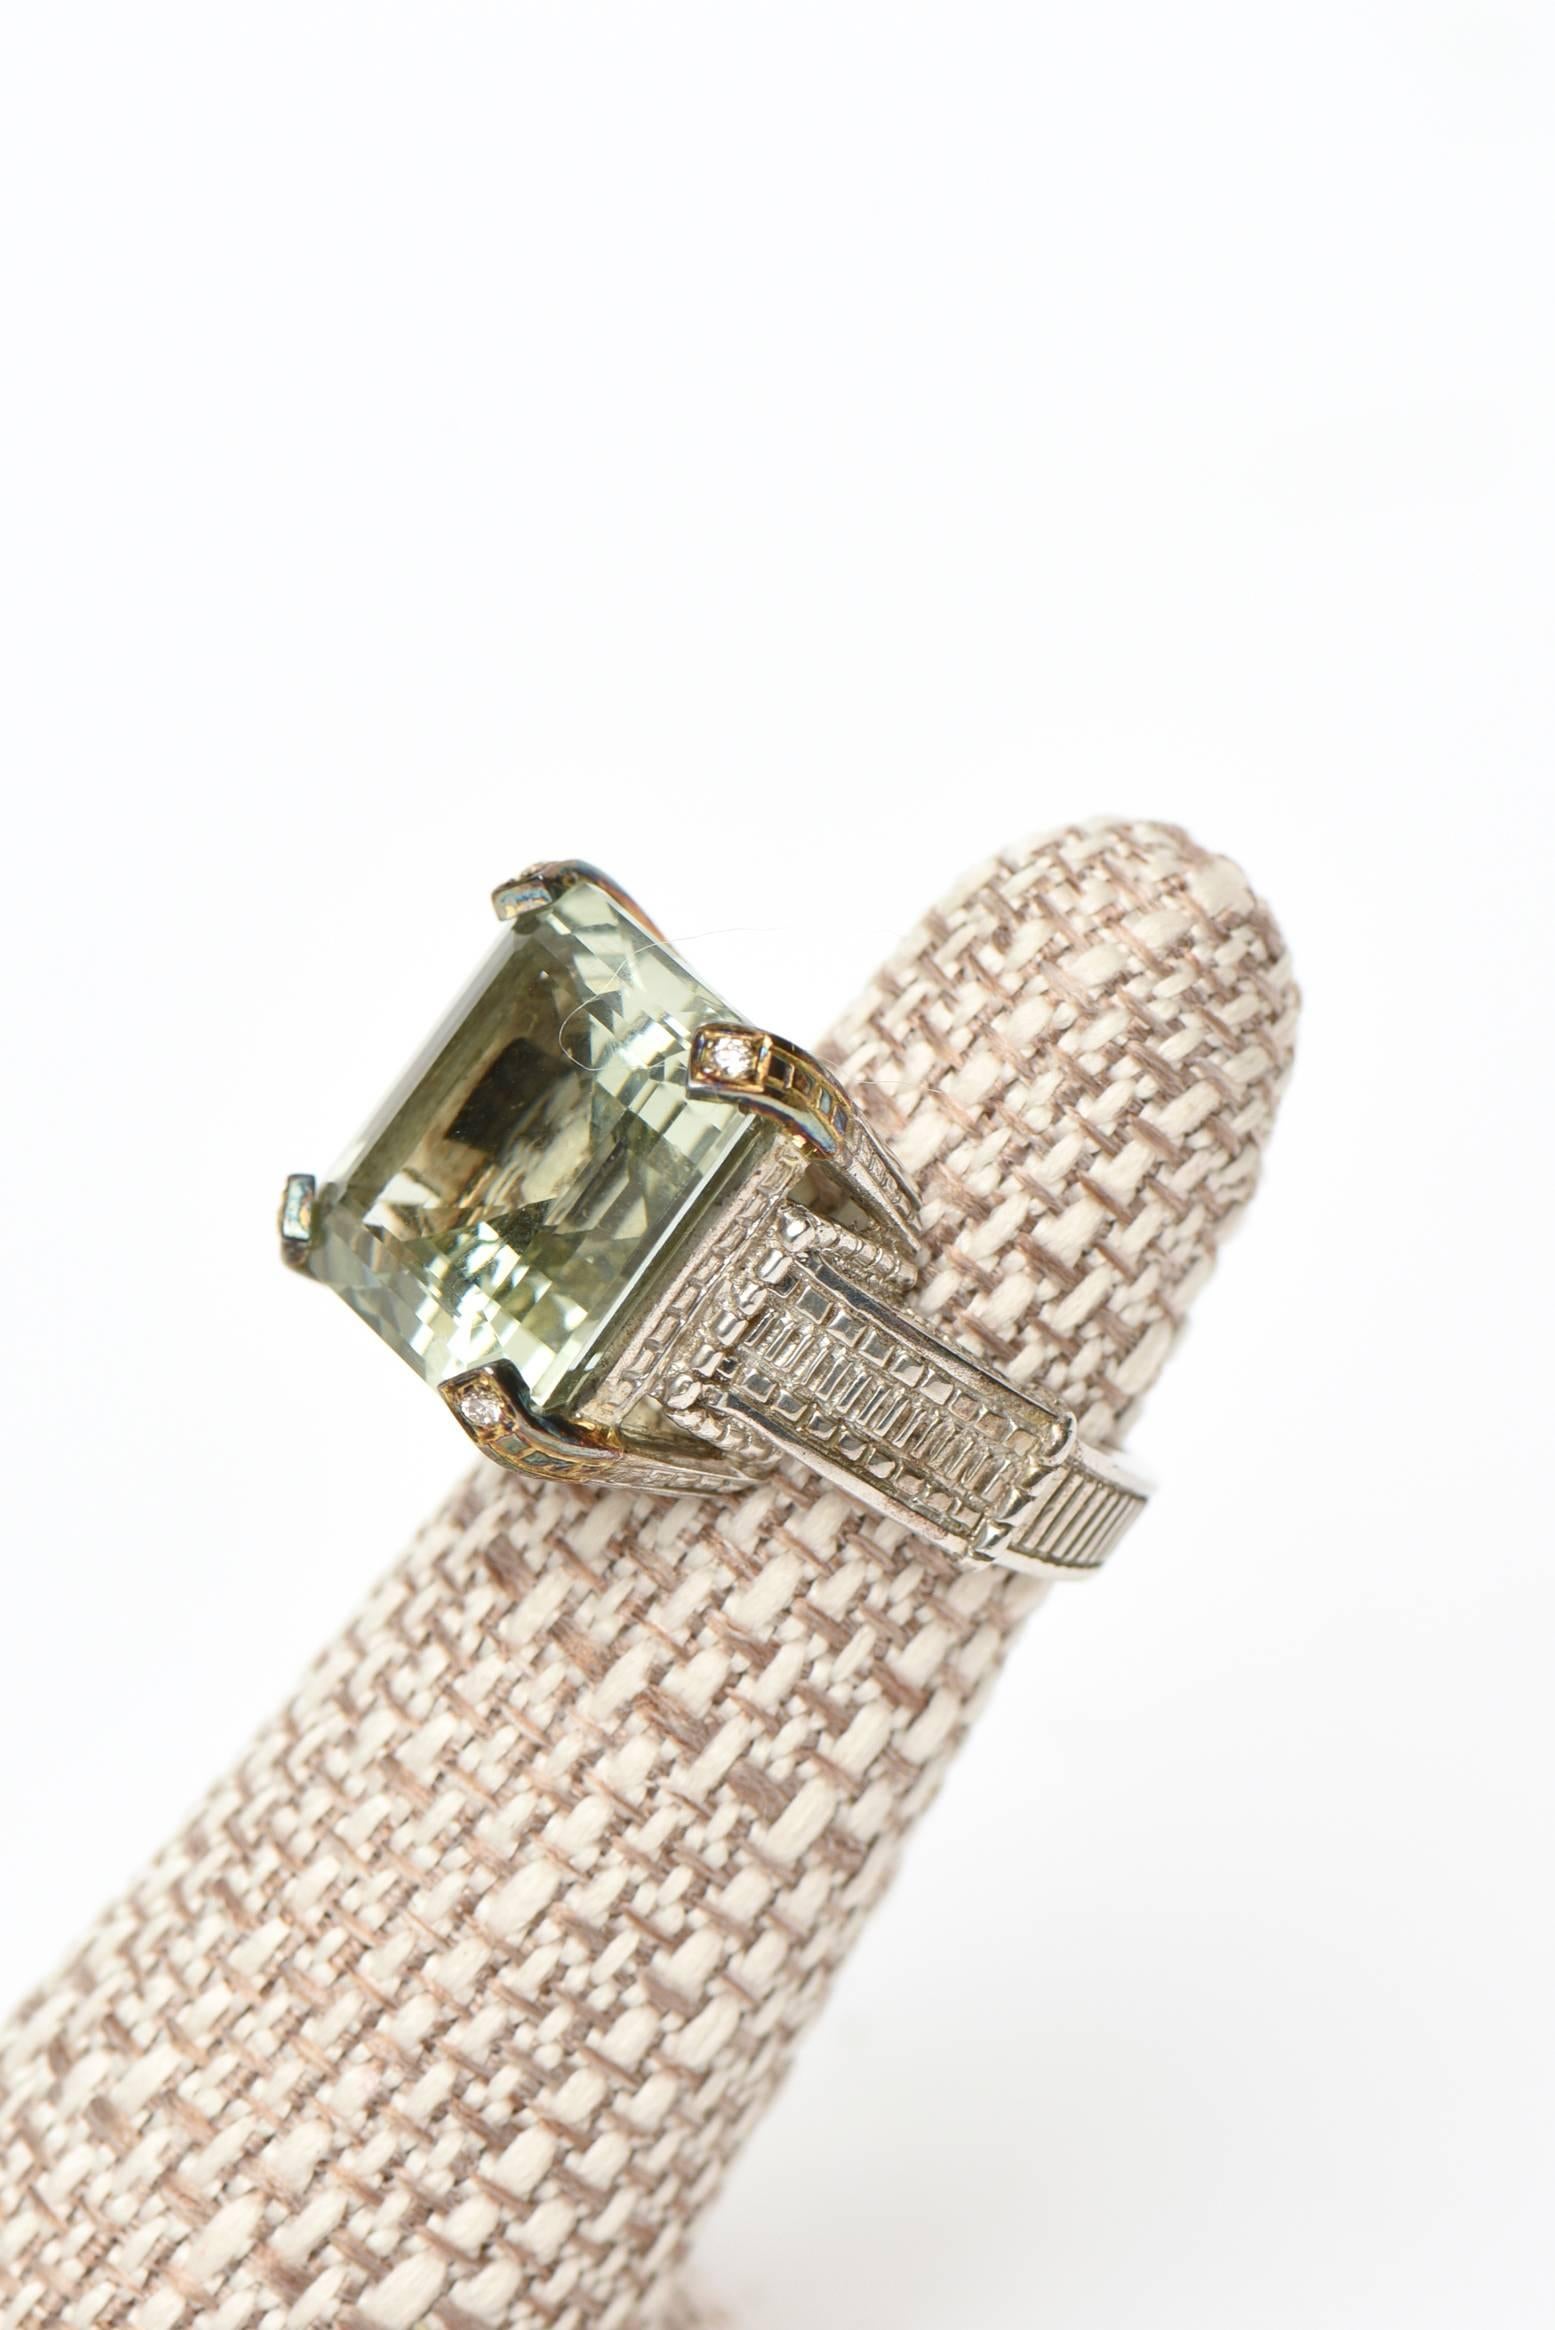 Emerald Cut Judith Ripka Green Amethyst, Diamond , !8K White Gold and Sterling Silver Ring